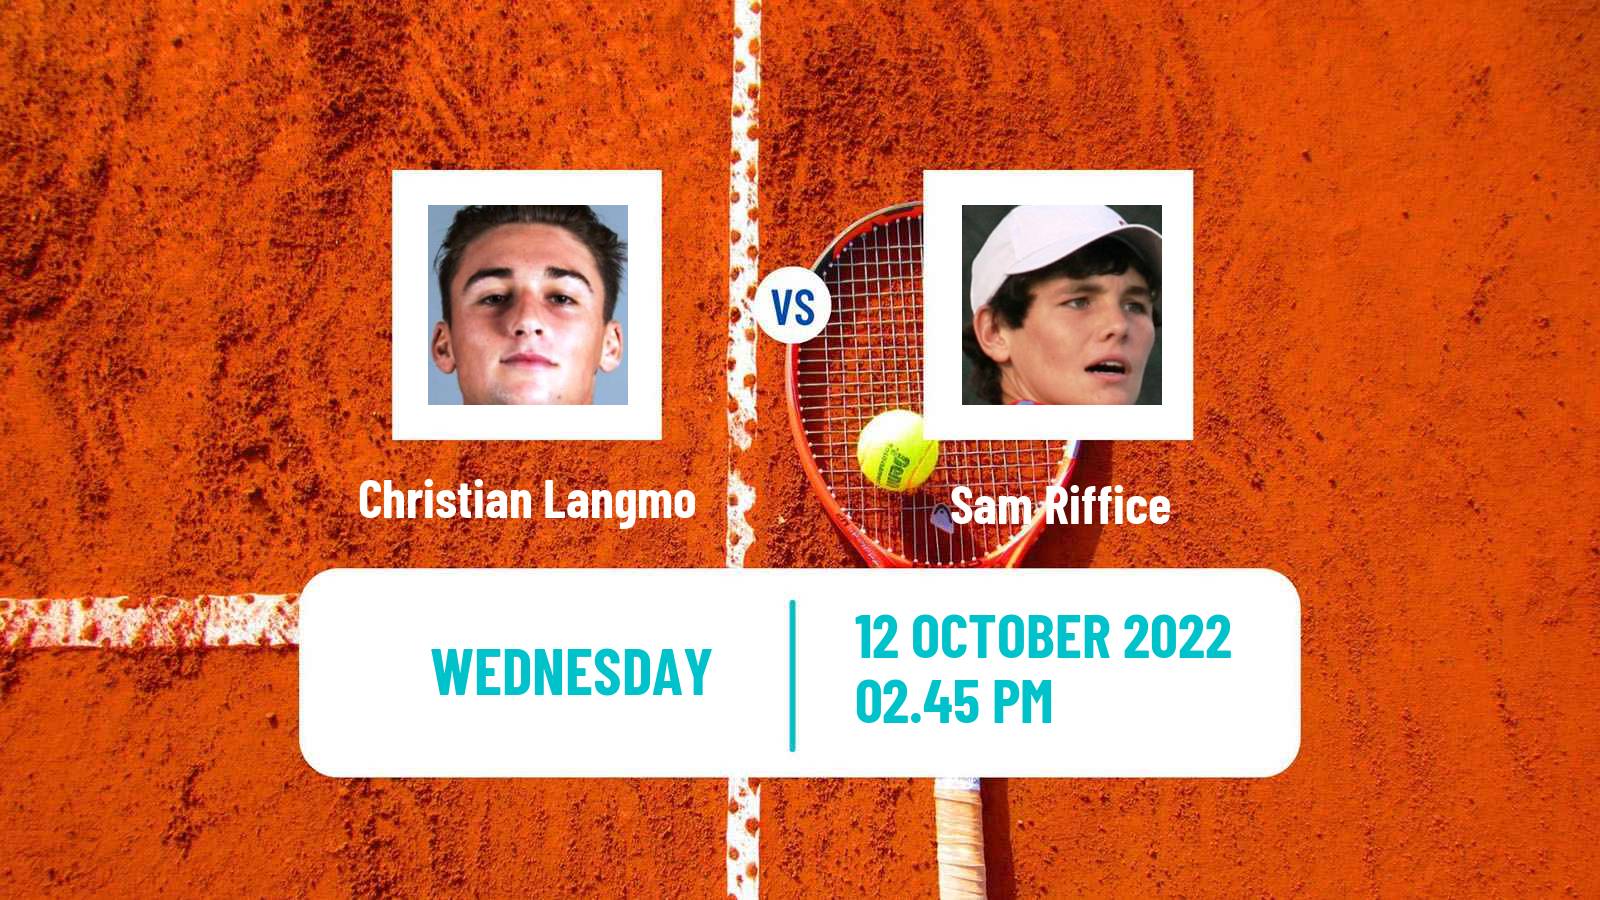 Tennis ATP Challenger Christian Langmo - Sam Riffice